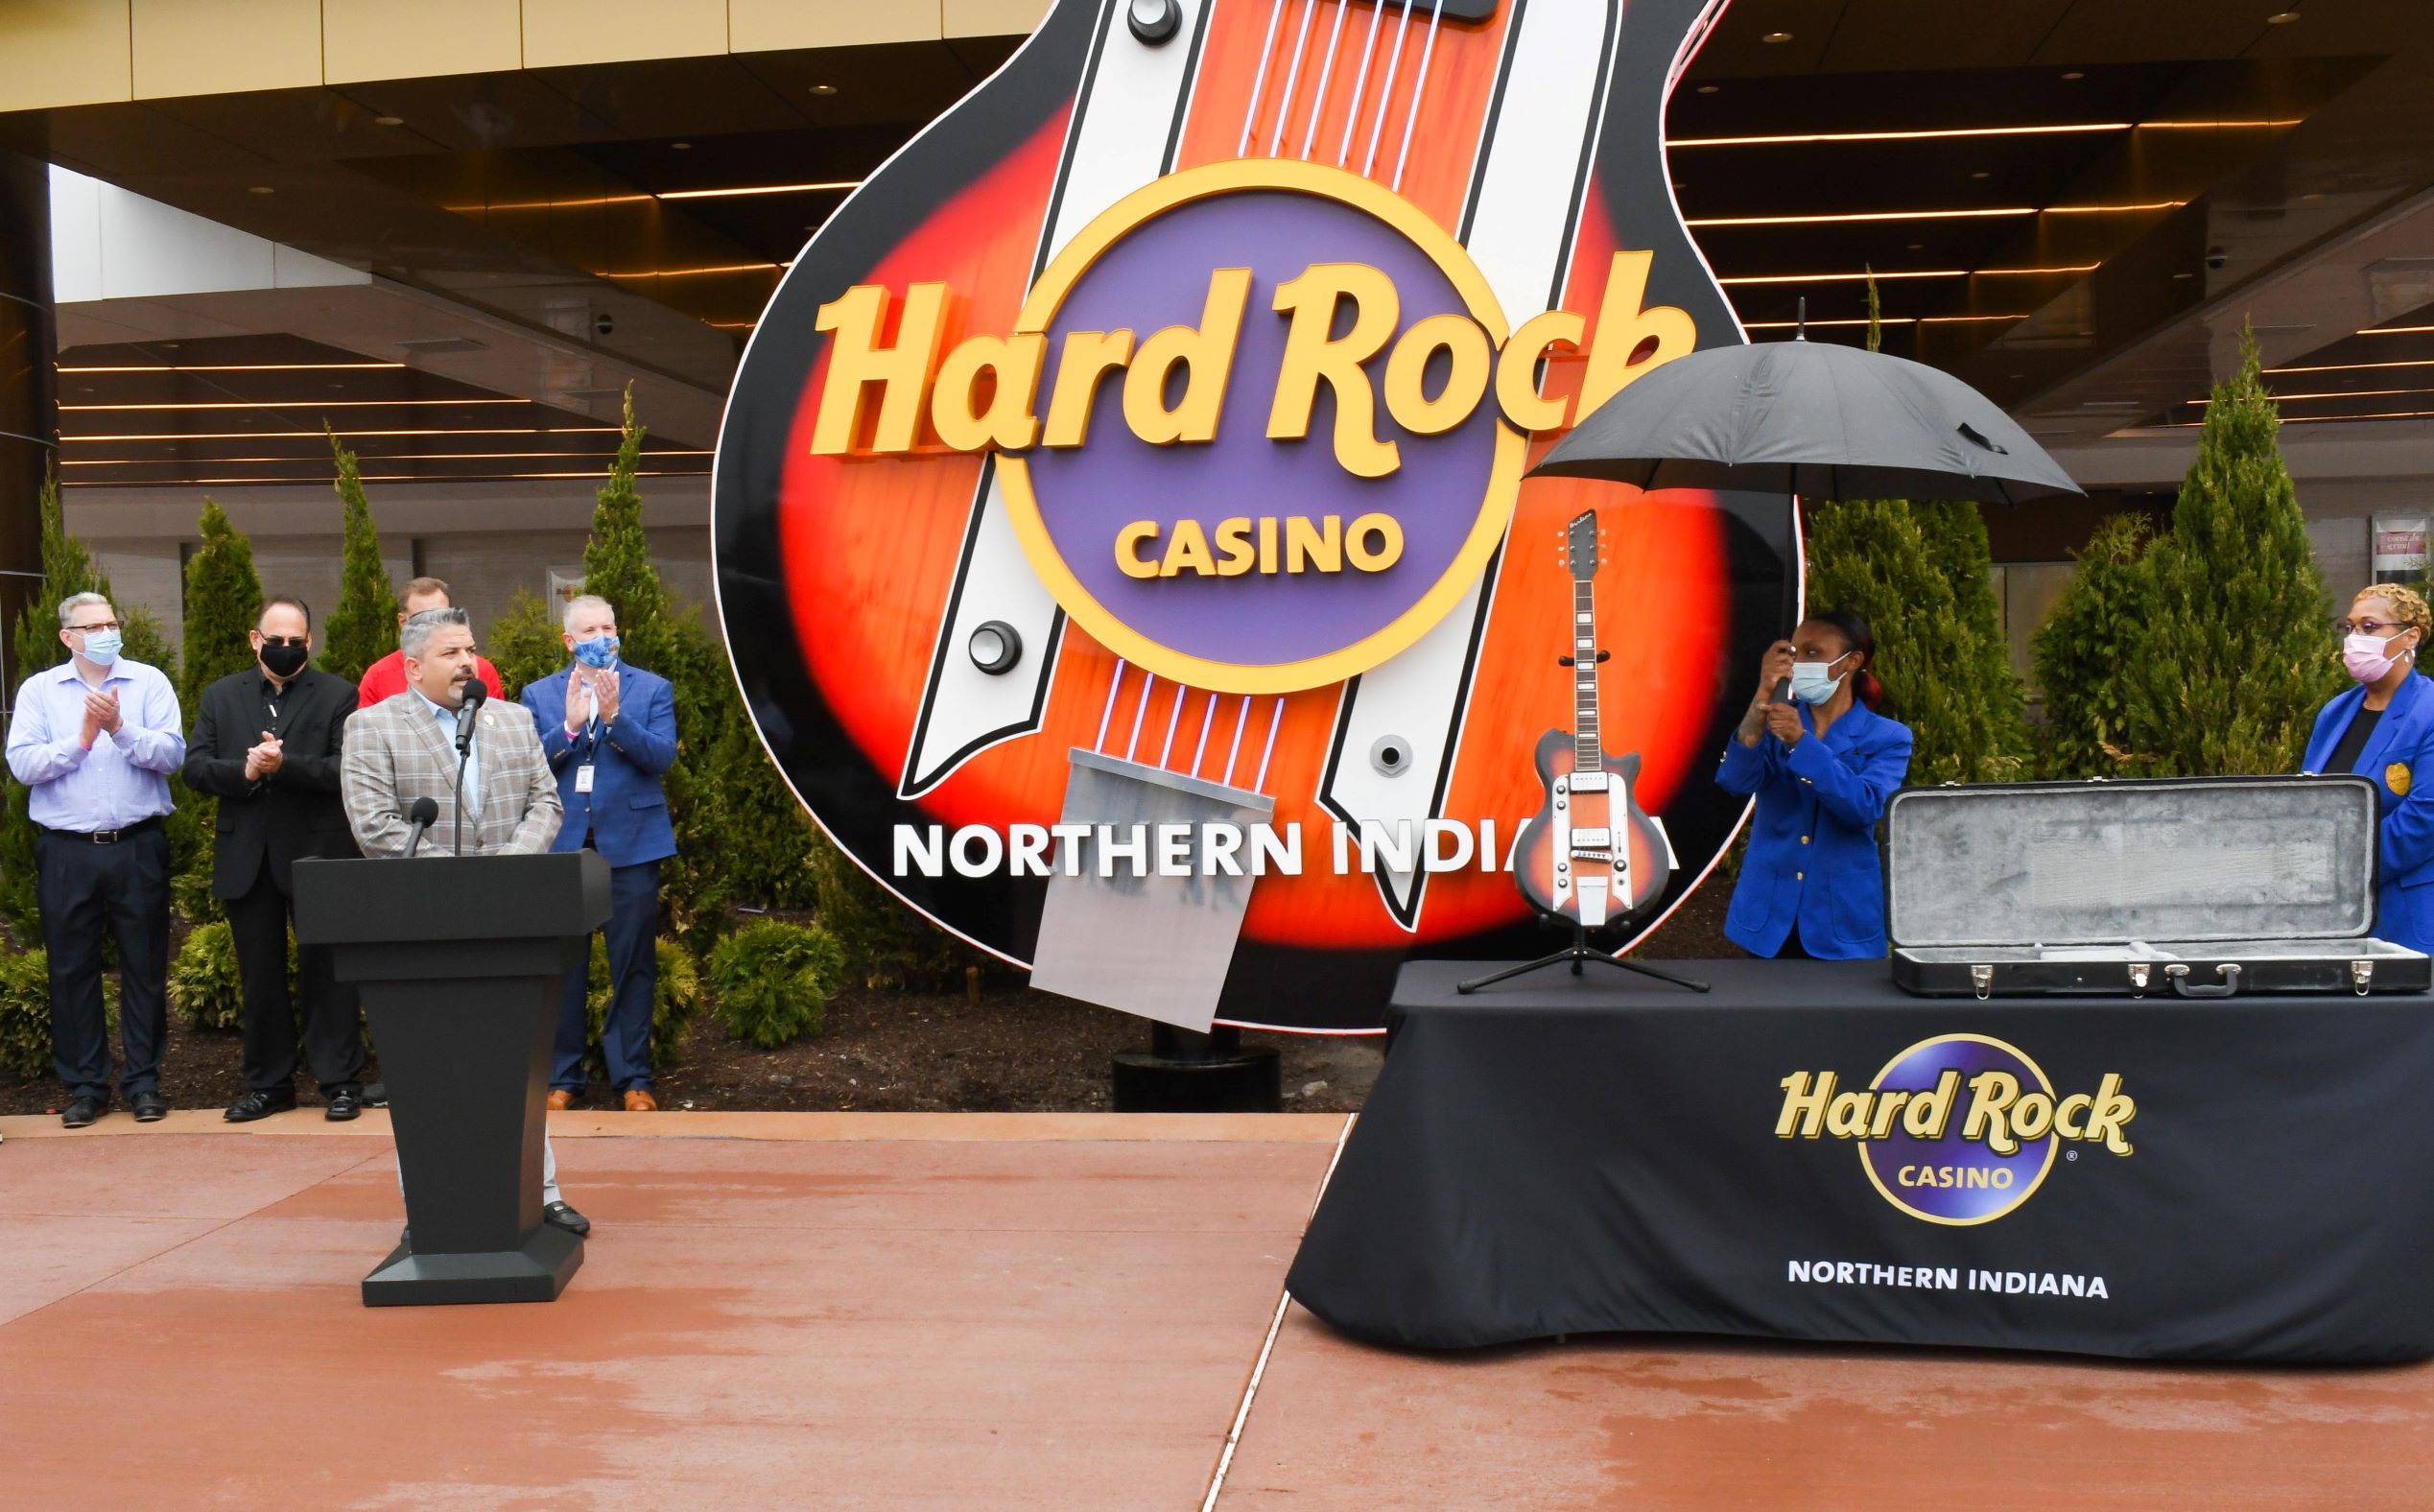 Hard Rock Casino in Gary, Indiana Opens Its Doors